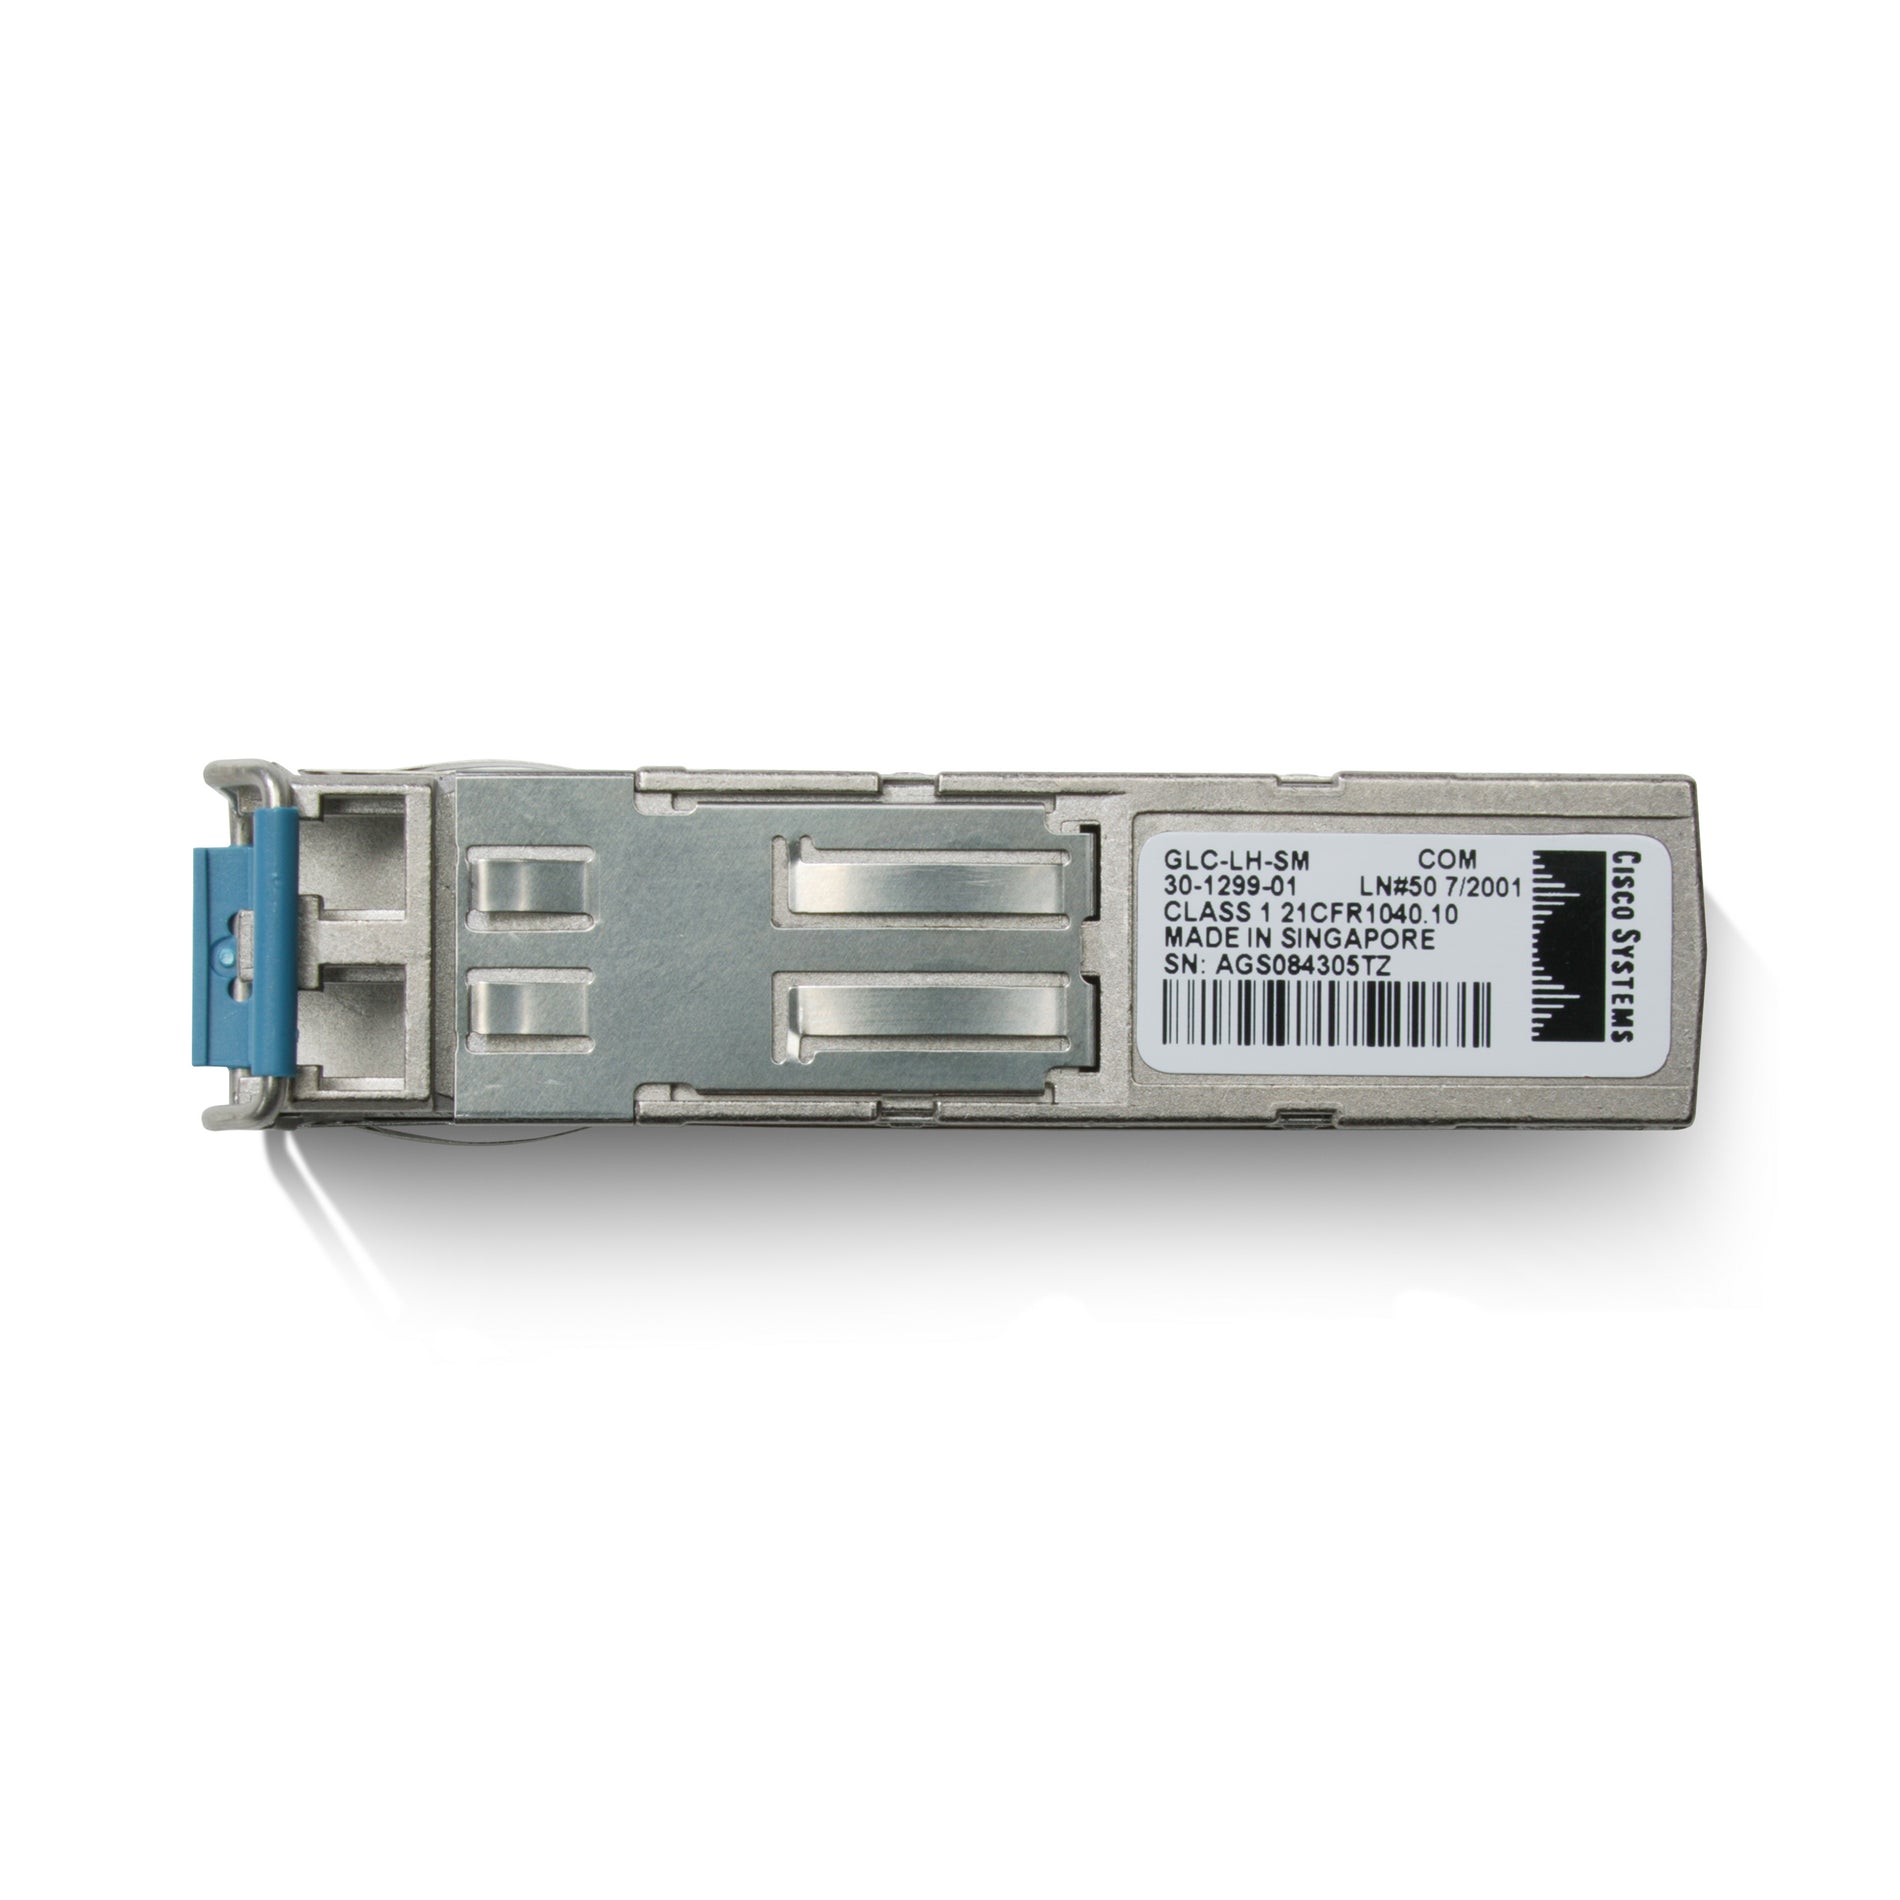 Cisco GLC-LH-SM 1000Base-LX/LH SFP Module